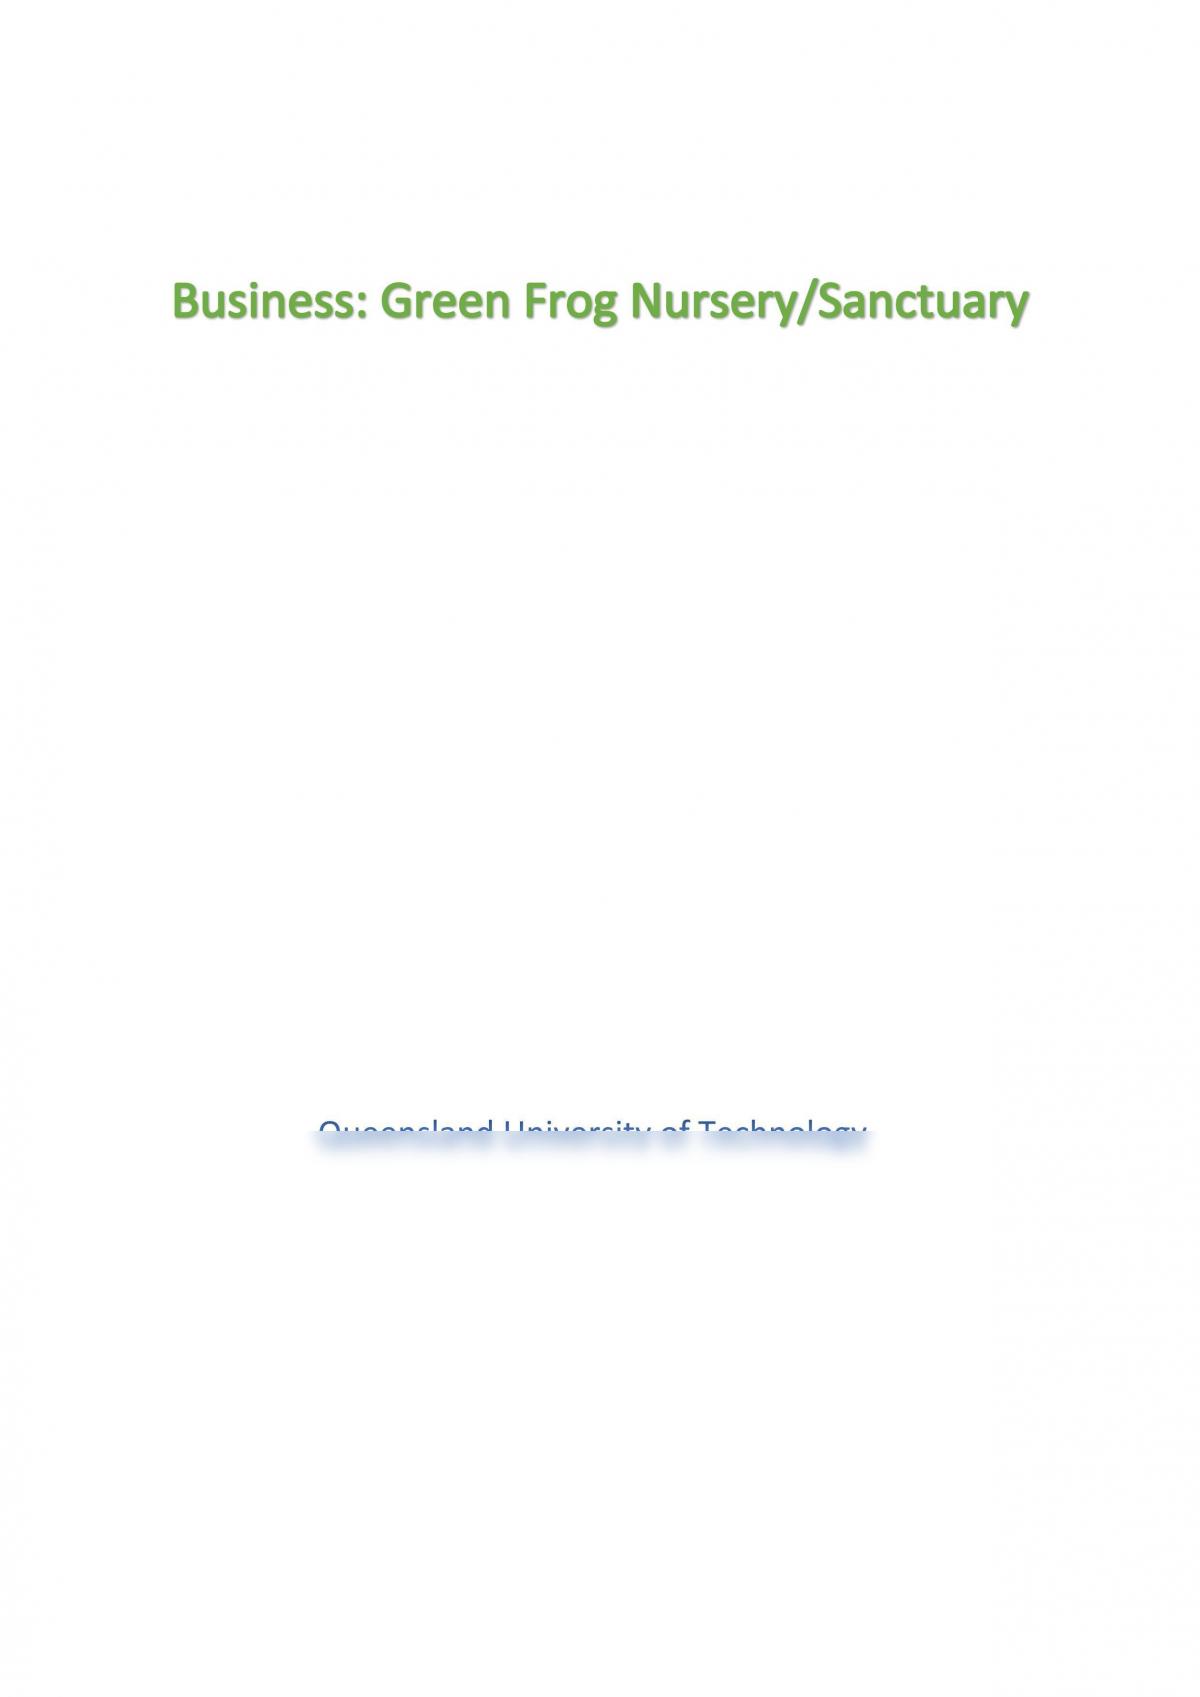 VBD Brief - Green Frog Nursery  - Page 1